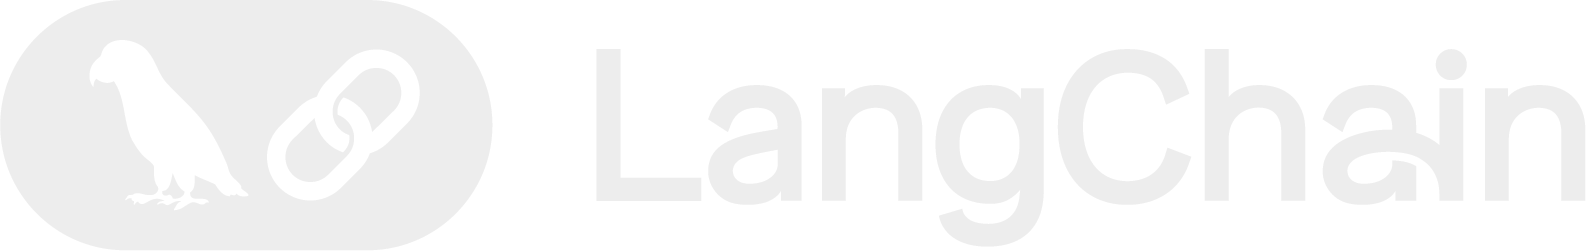 LangChain logo